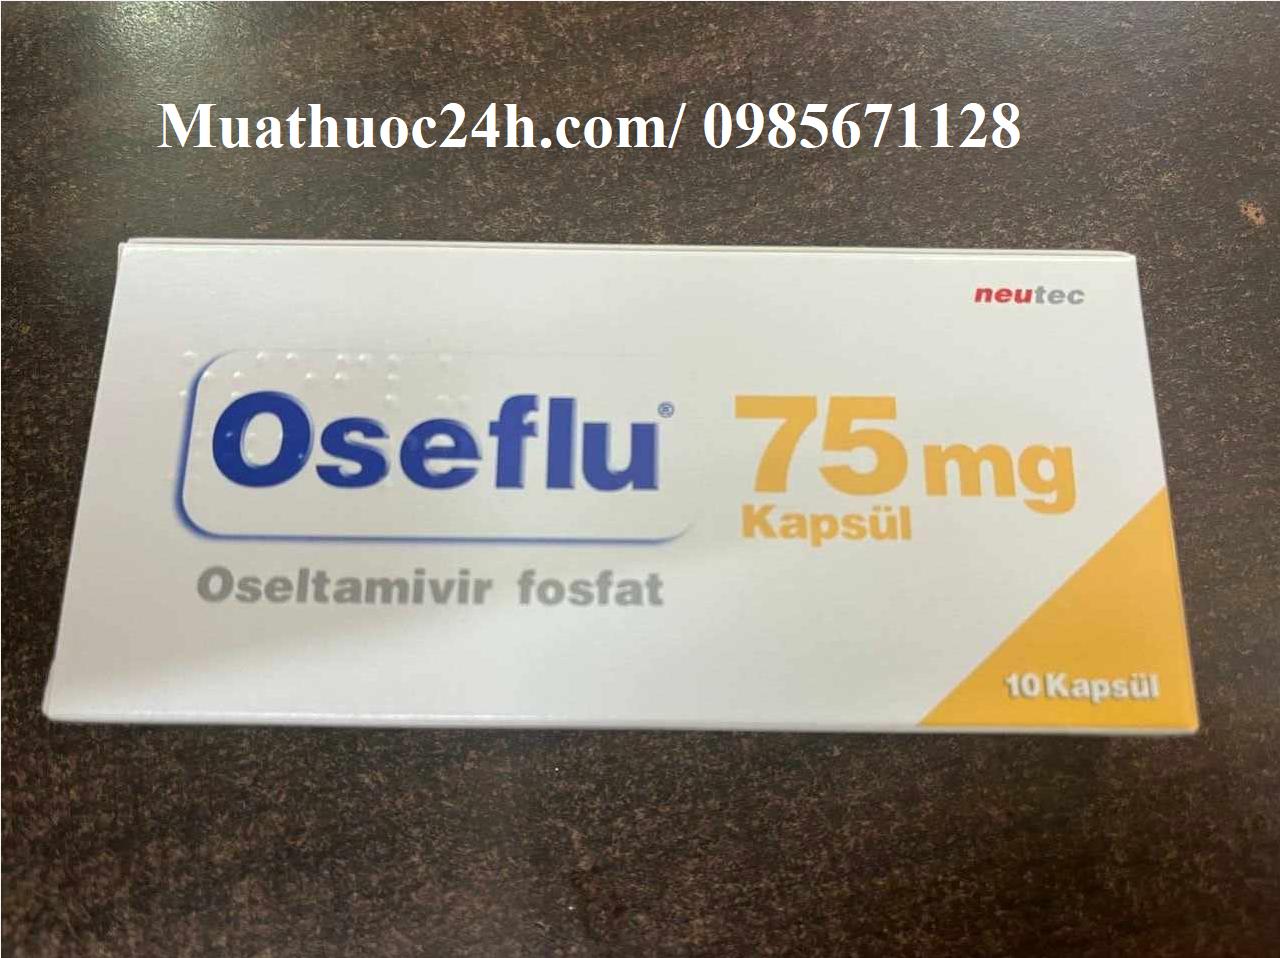 Thuốc Oseflu 75mg Oseltamivir phosphate giá bao nhiêu mua ở đâu